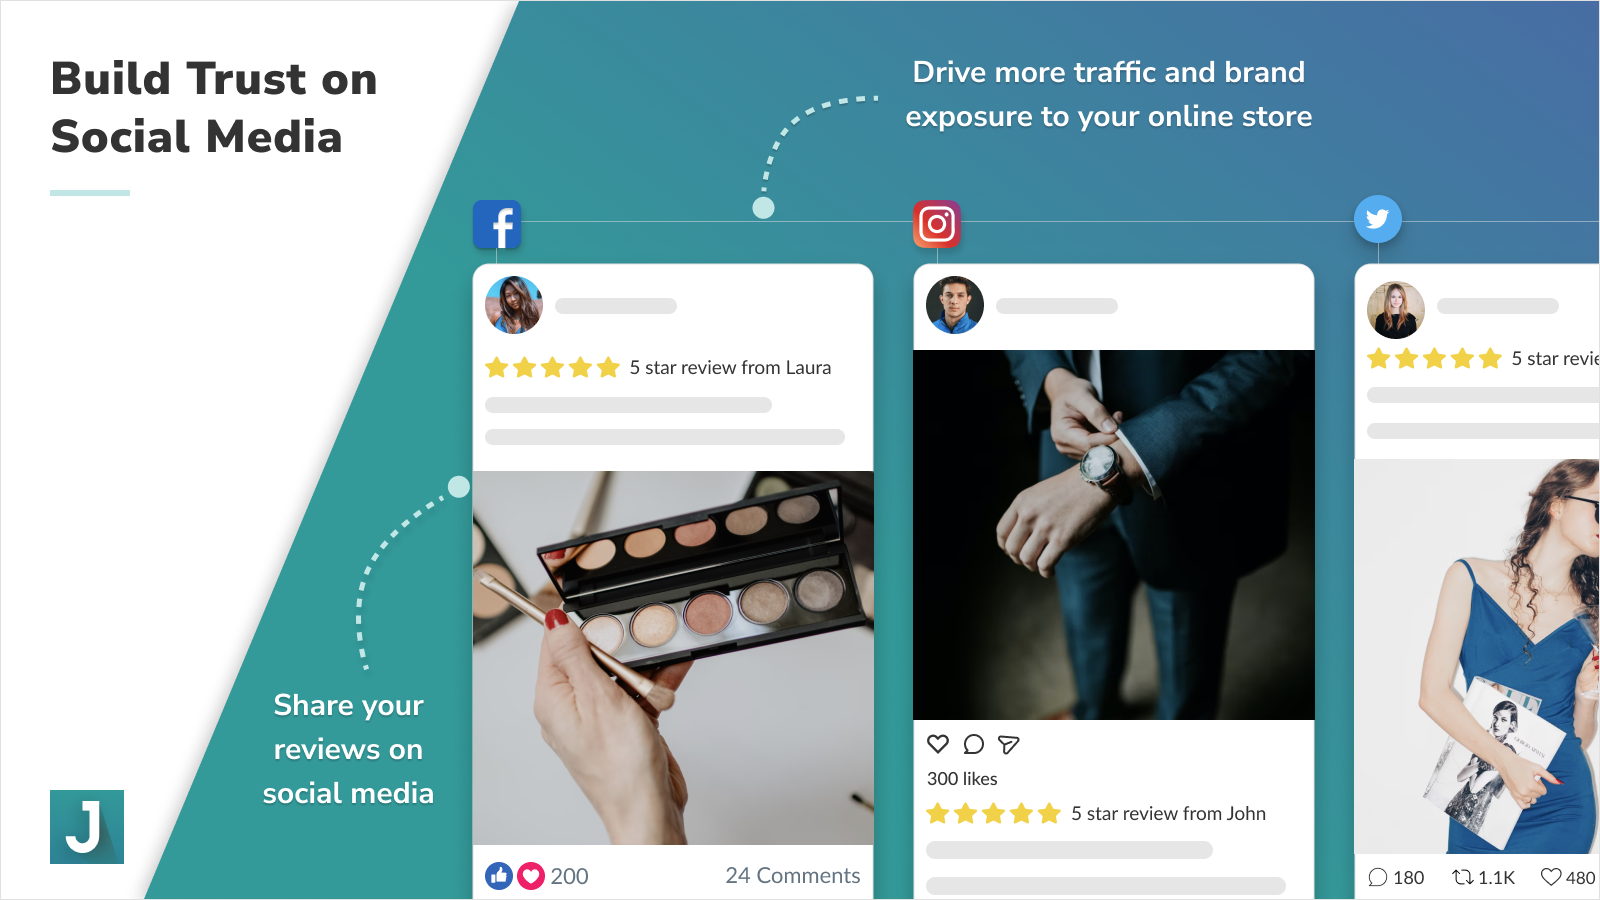 Share reviews on social media. Drive traffic on FB, Instagram